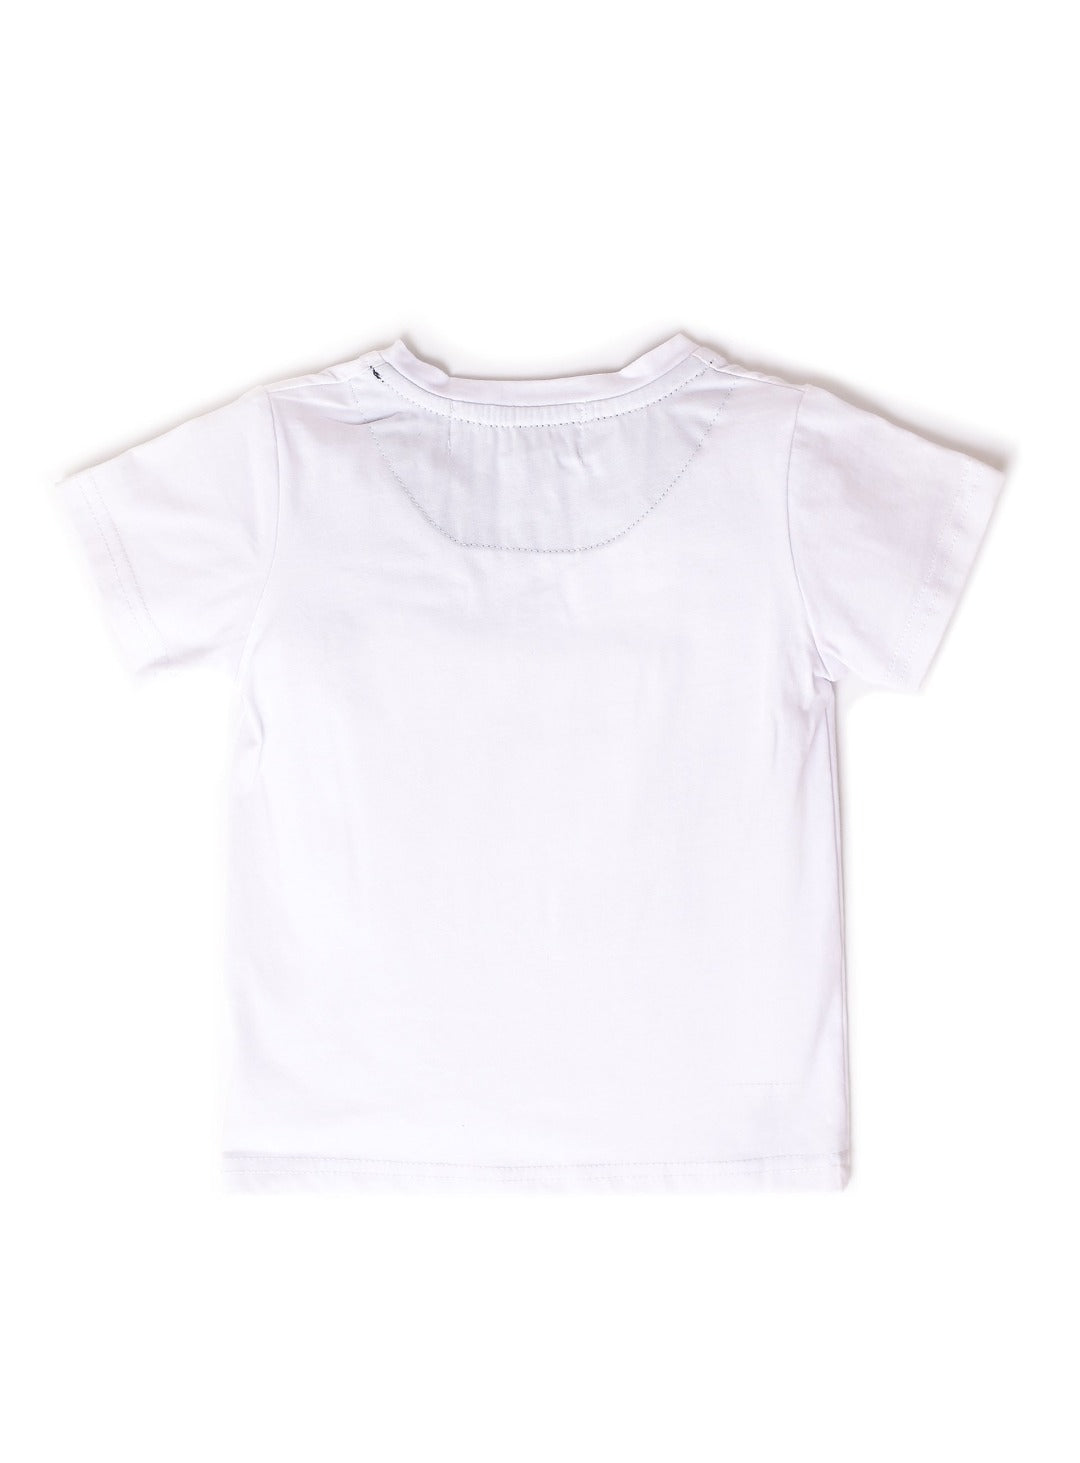 simply white t-shirt with denim pocket